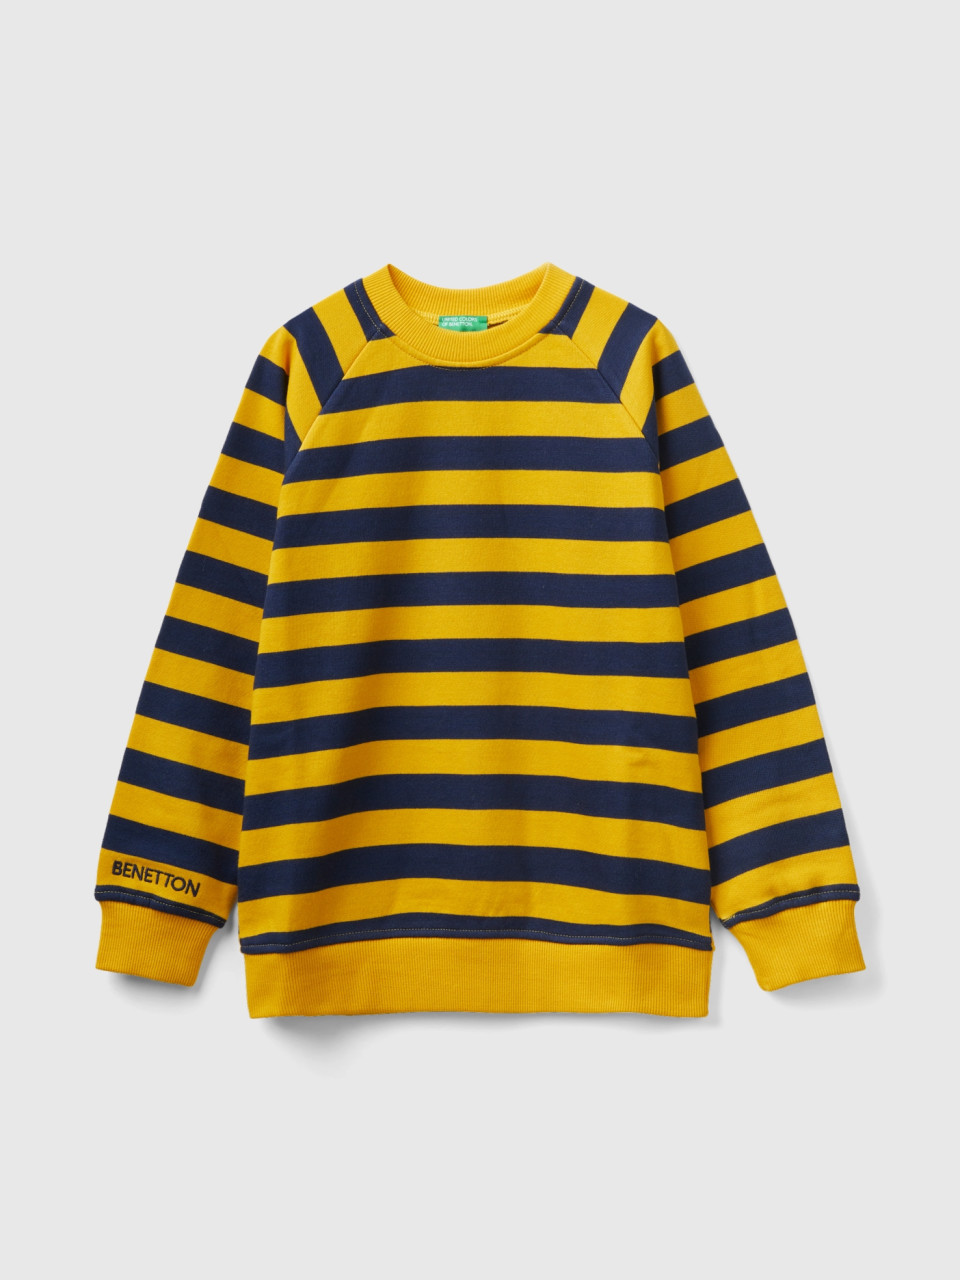 Benetton, Yellow Ochre And Dark Blue Striped Sweatshirt, Multi-color, Kids